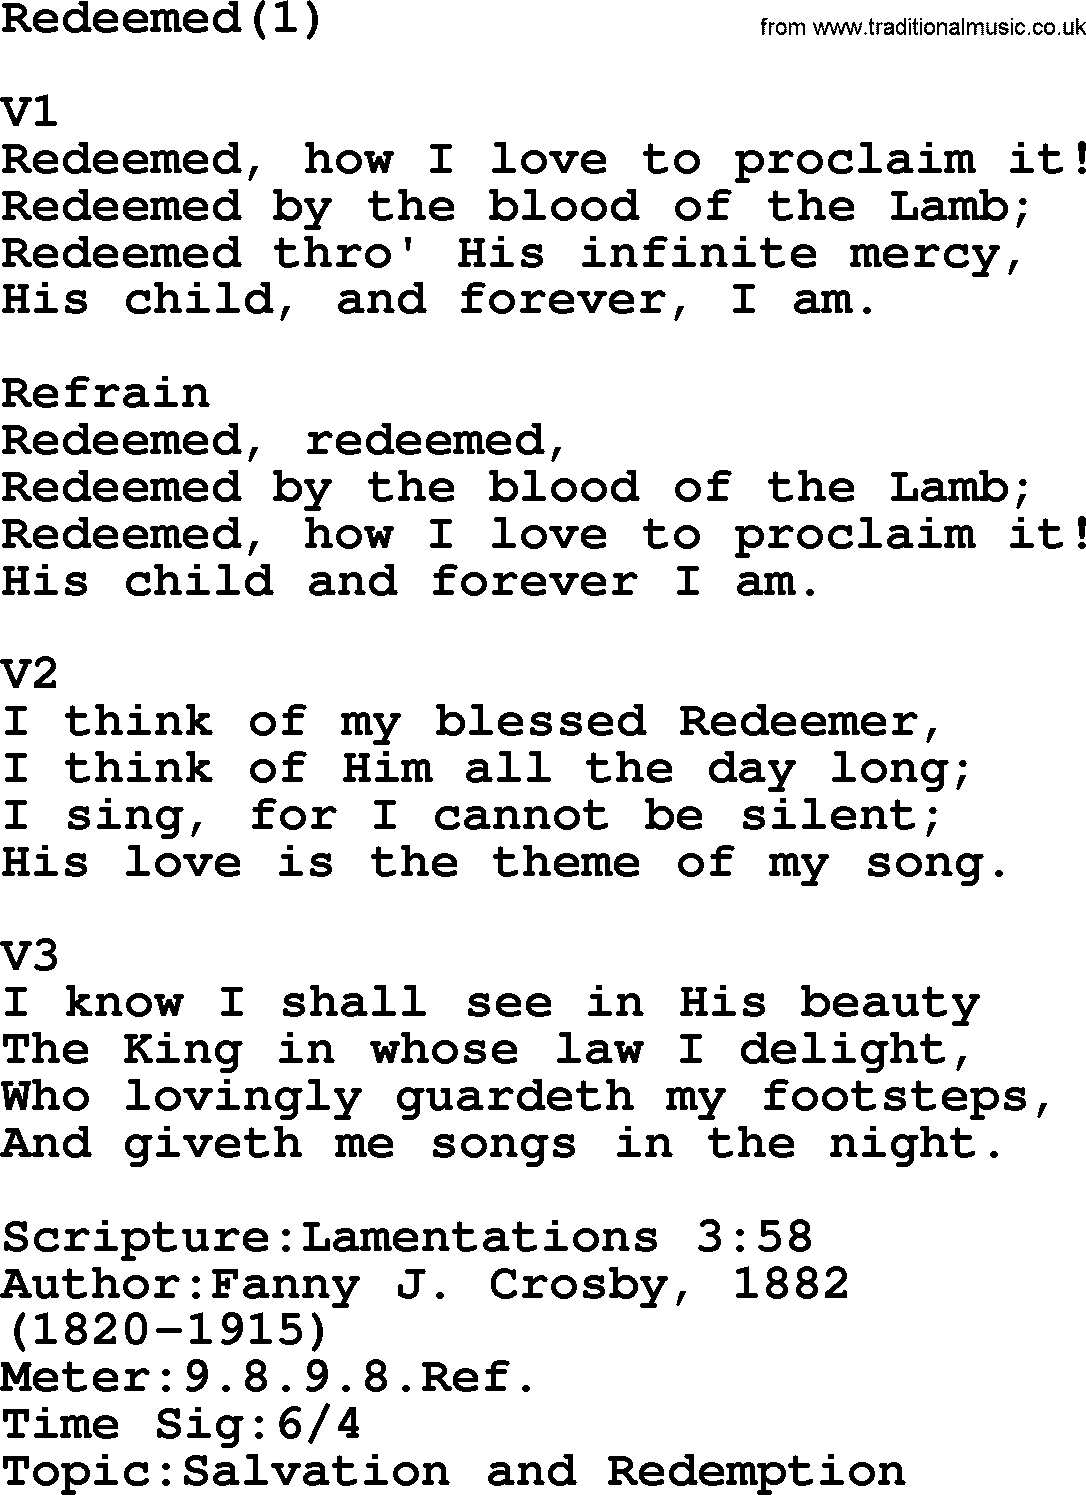 Adventist Hynms collection, Hymn: Redeemed(1), lyrics with PDF